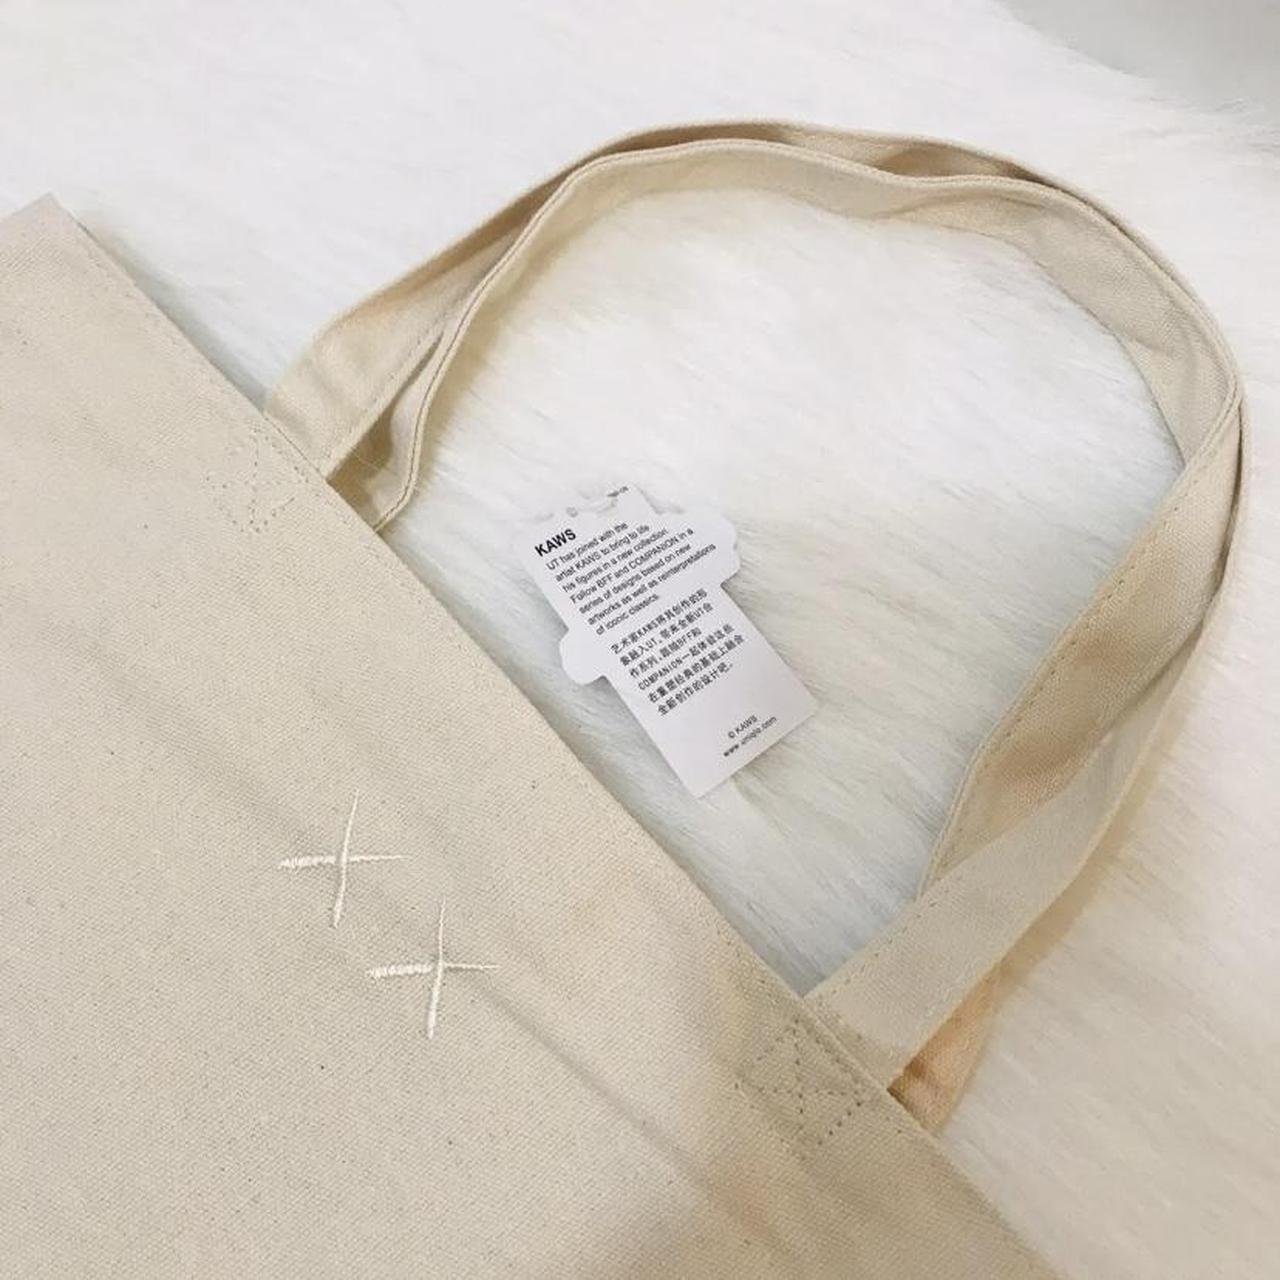 Uniqlo X Kaws Tote Bag, Cotton, Brand New With Tag